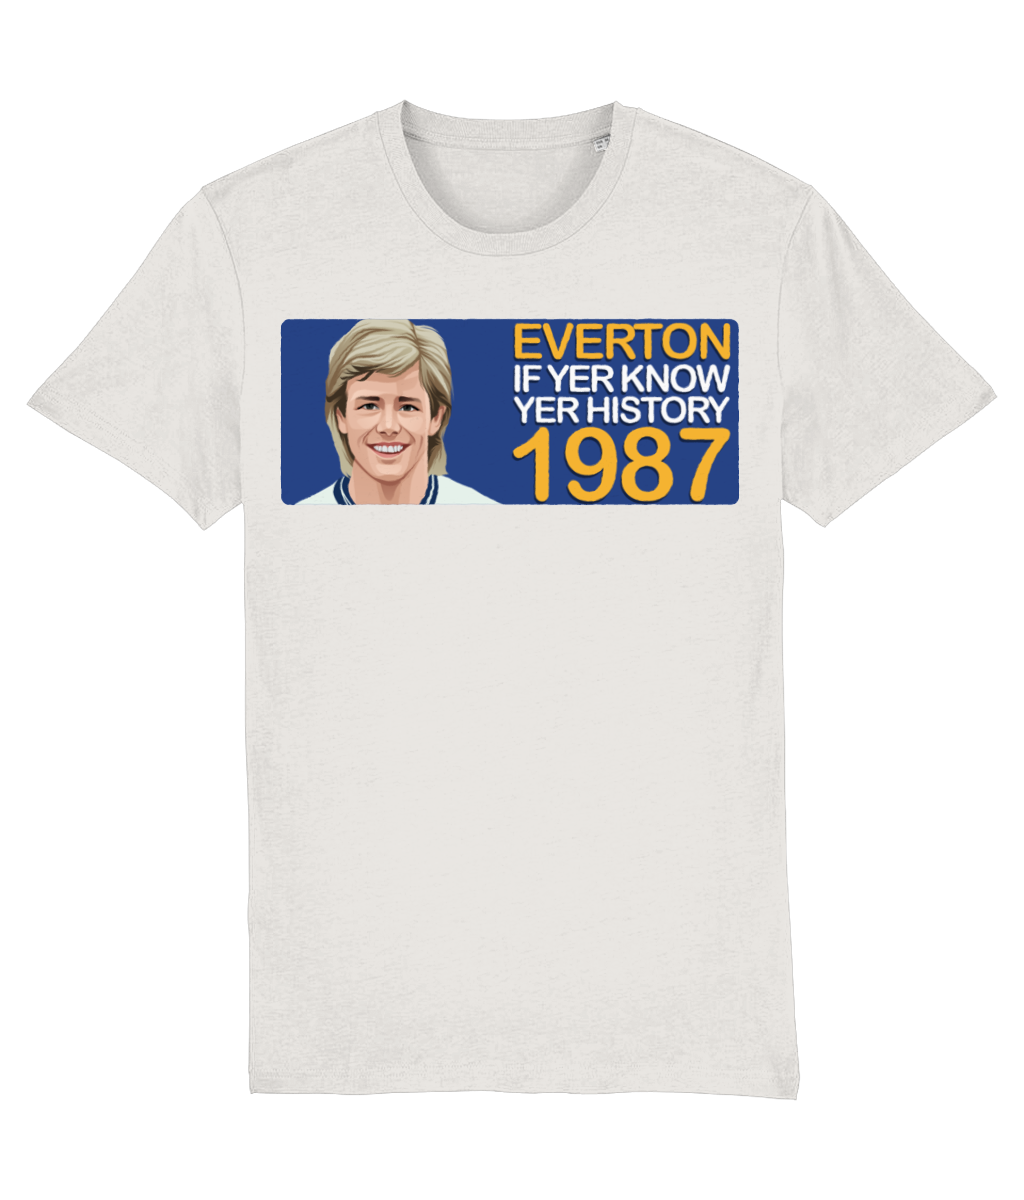 Everton 1987 Adrian Heath If Yer Know Yer History Unisex T-Shirt Stanley/Stella Retrotext Vintage White XX-Small 